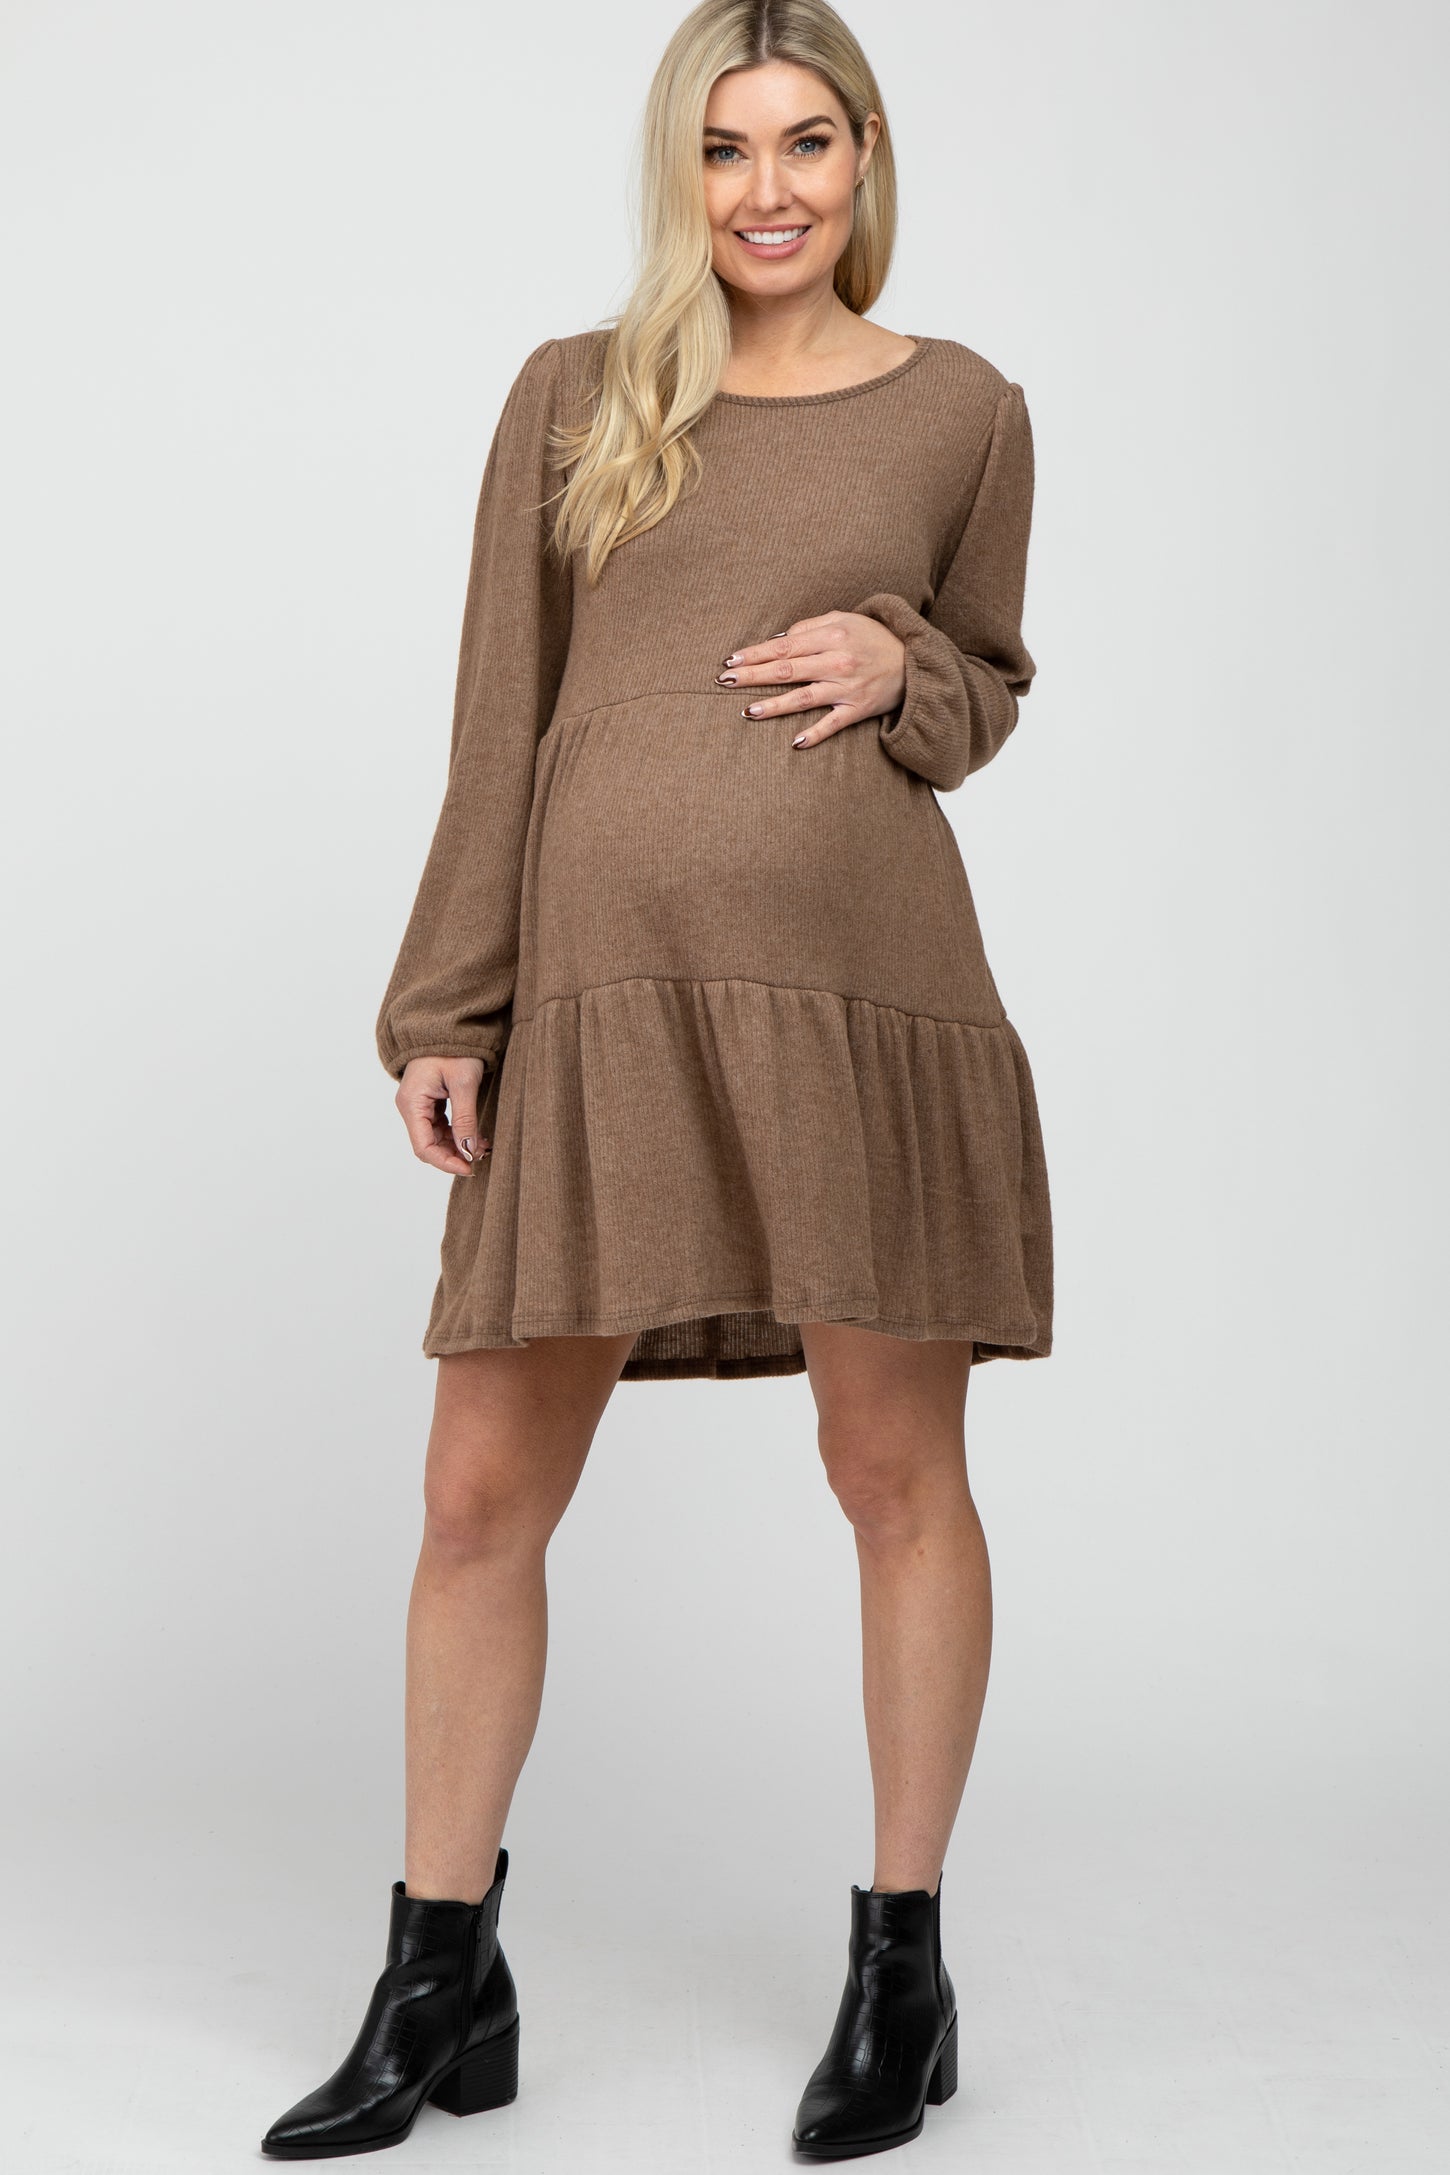 Mocha Brushed Knit Tiered Maternity Dress